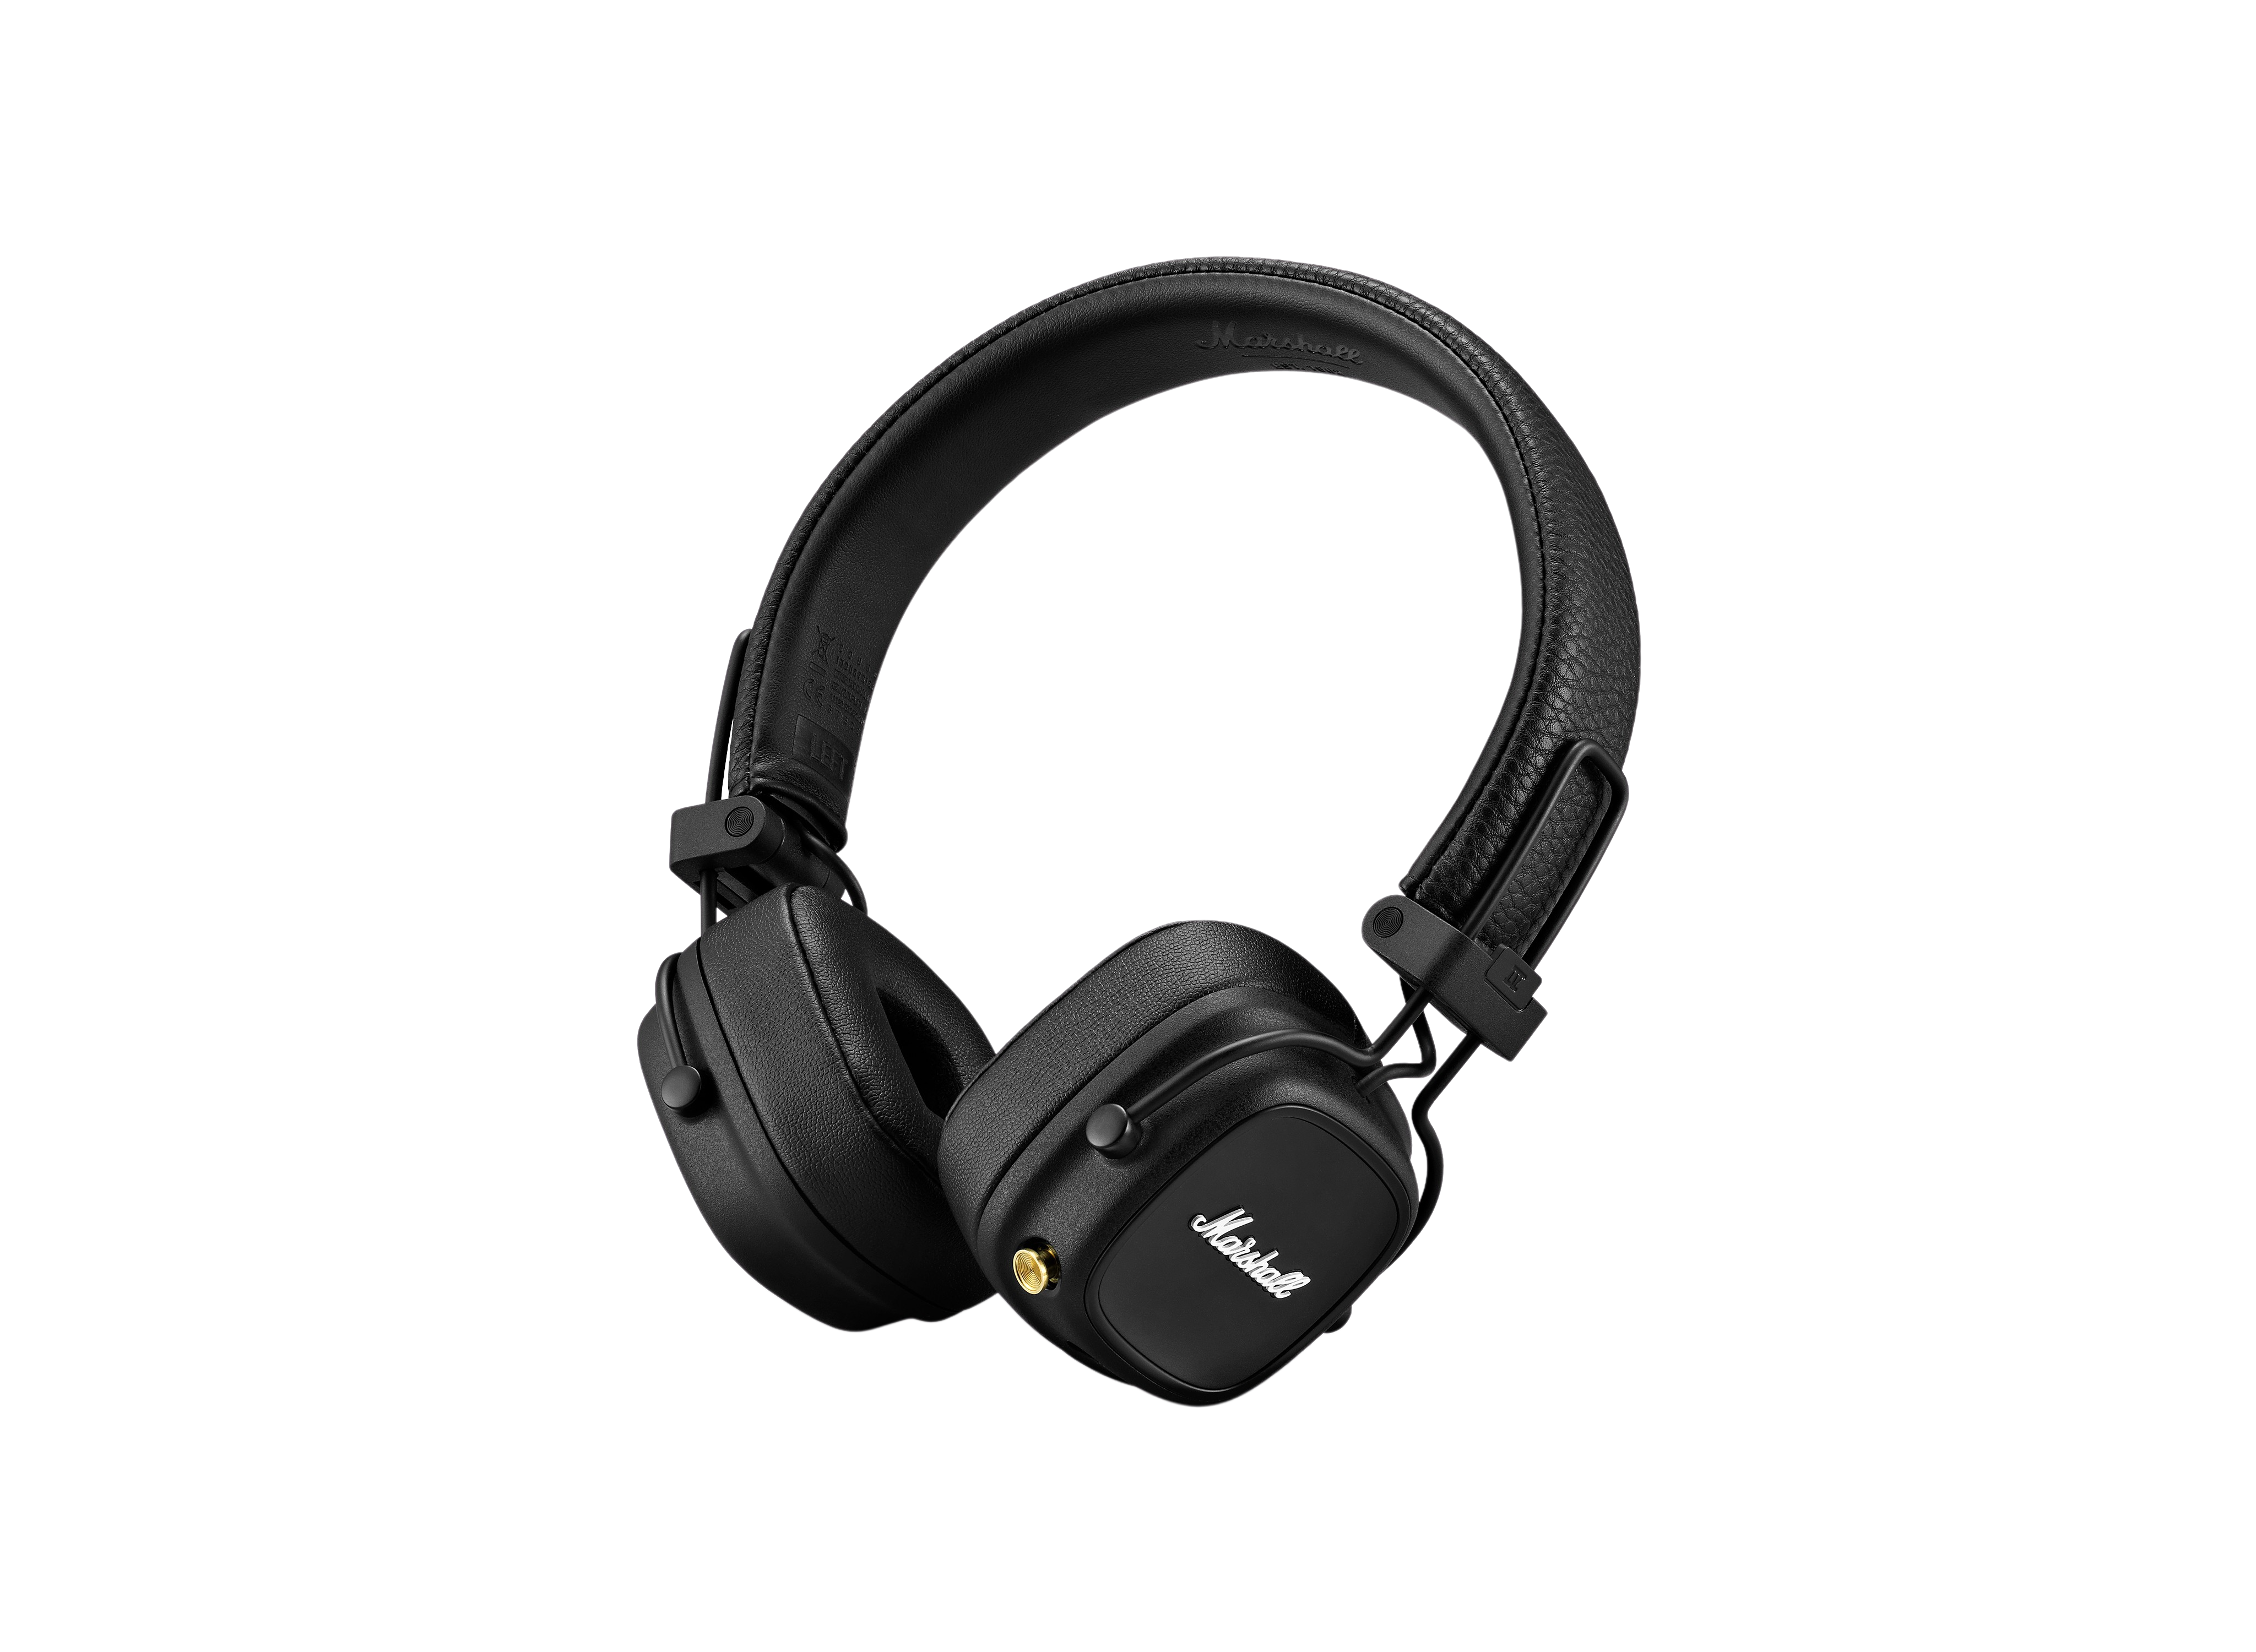 Kopfhörer Cancelling mieten Noise € 29,90 Max Apple Bluetooth pro AirPods Grover Over-ear ab Monat |